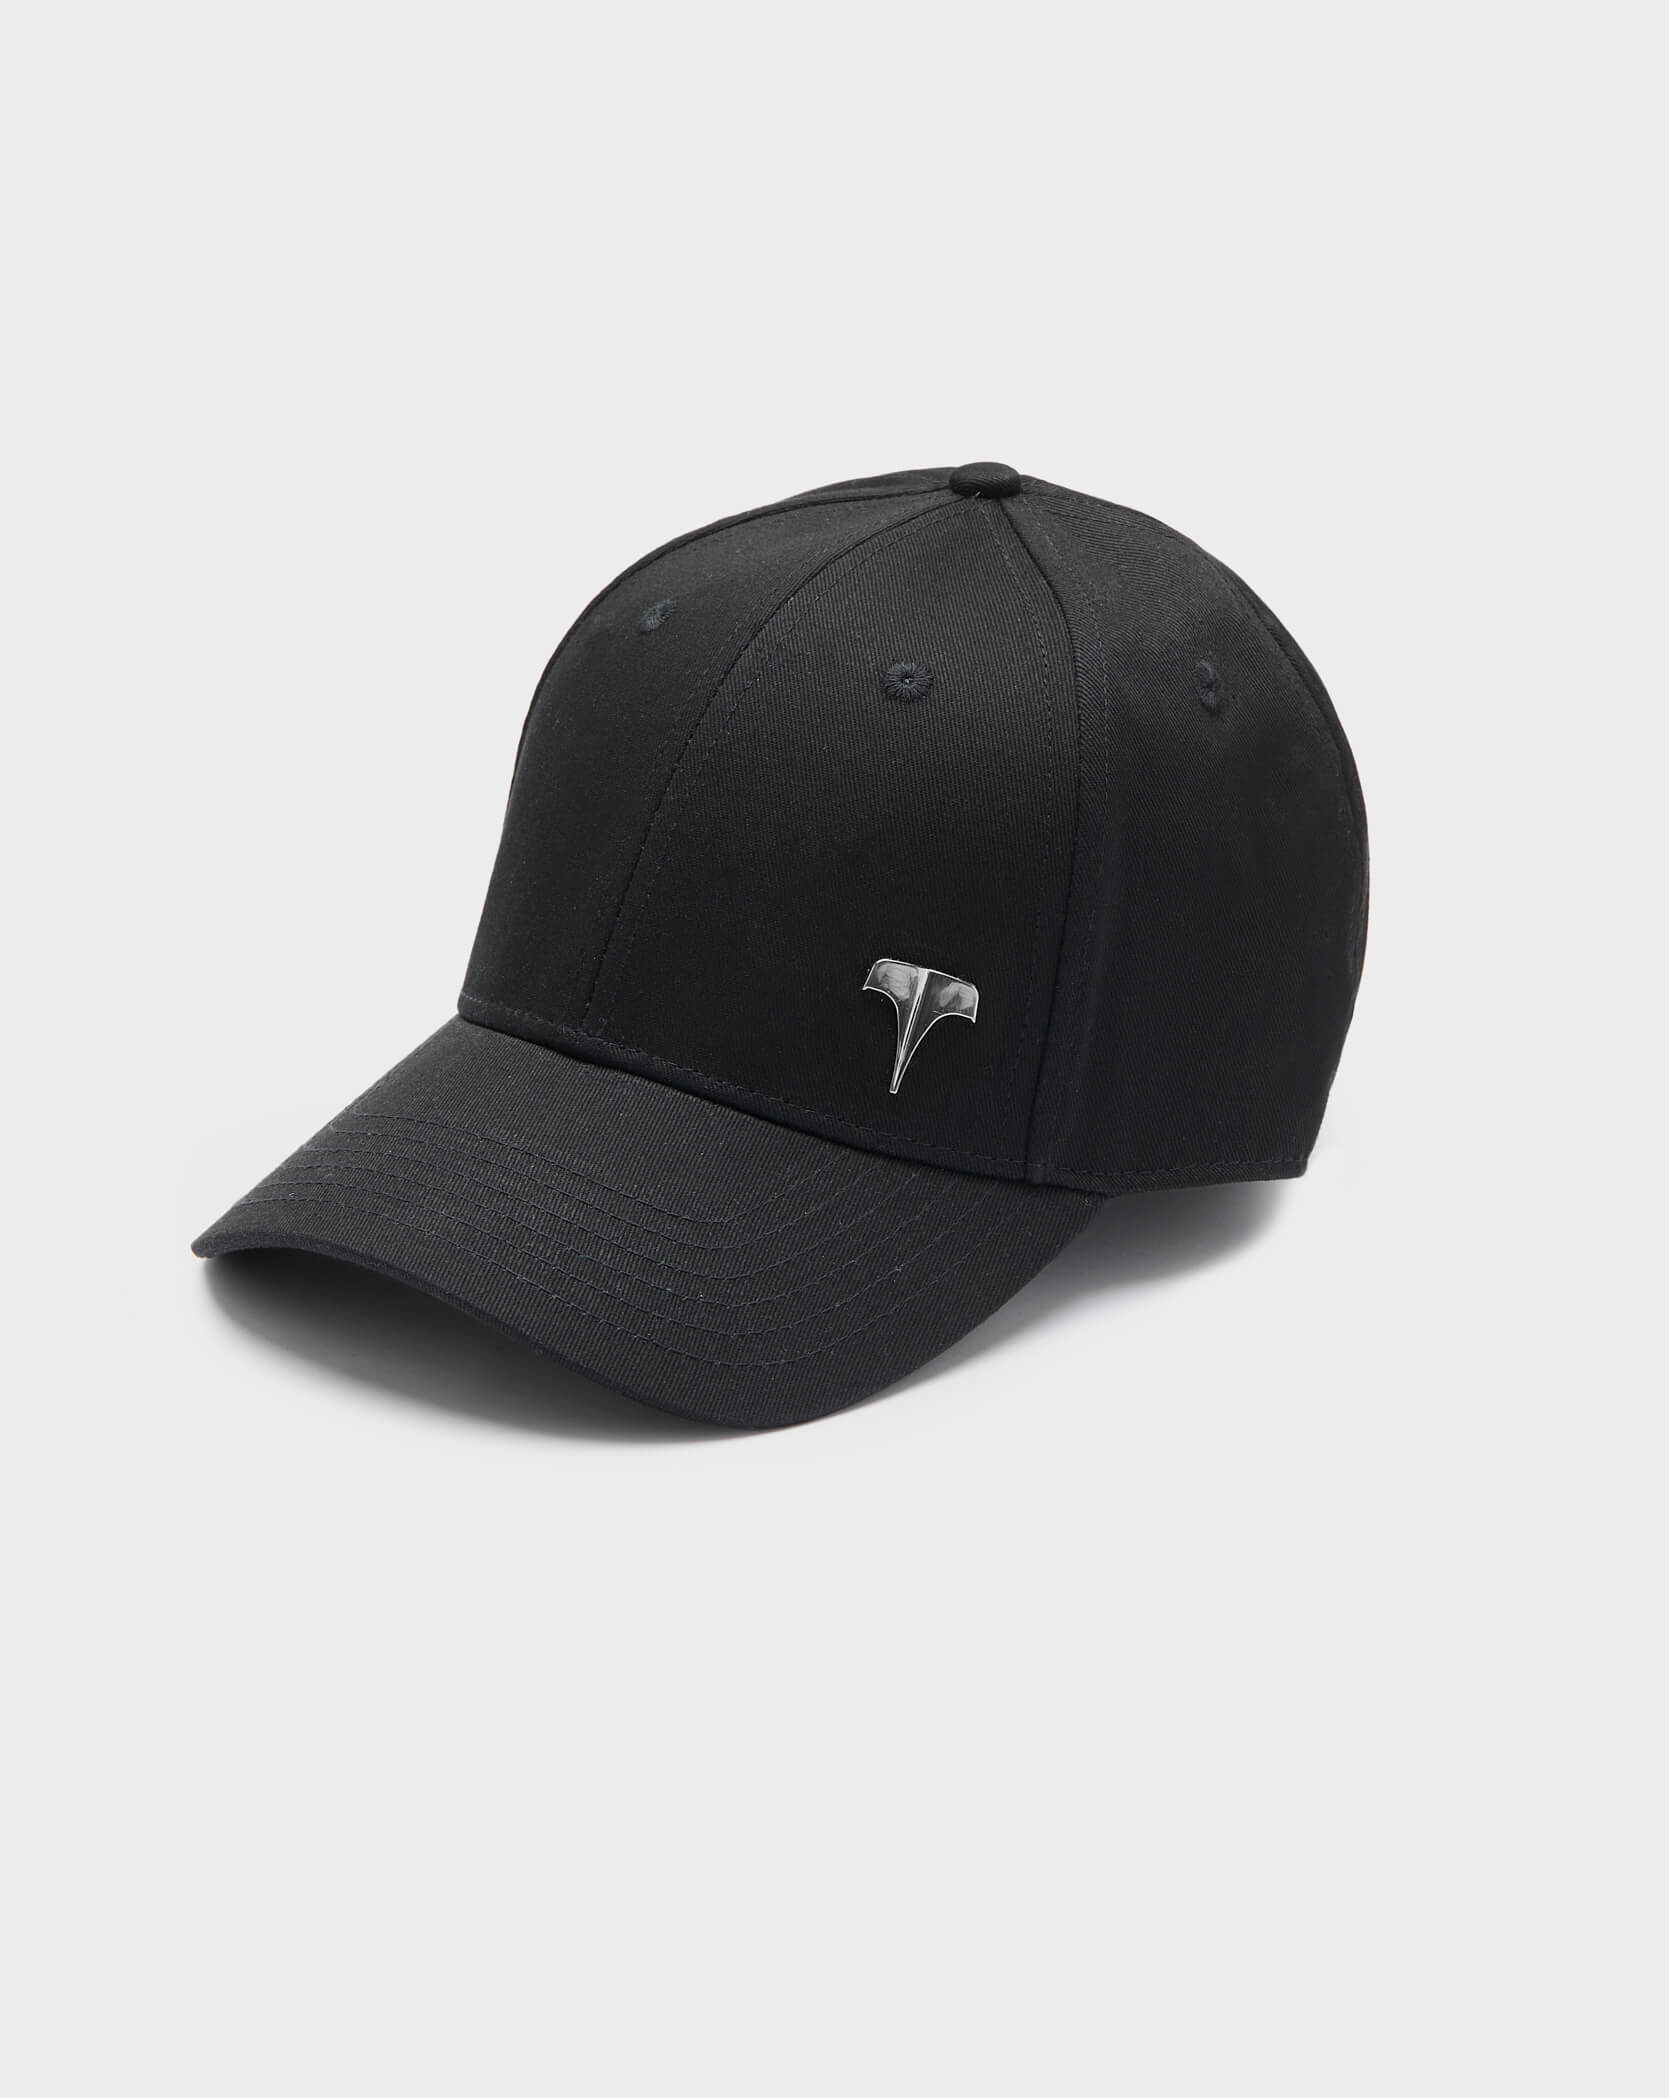 Twinzz black pitcher cap with silver logo